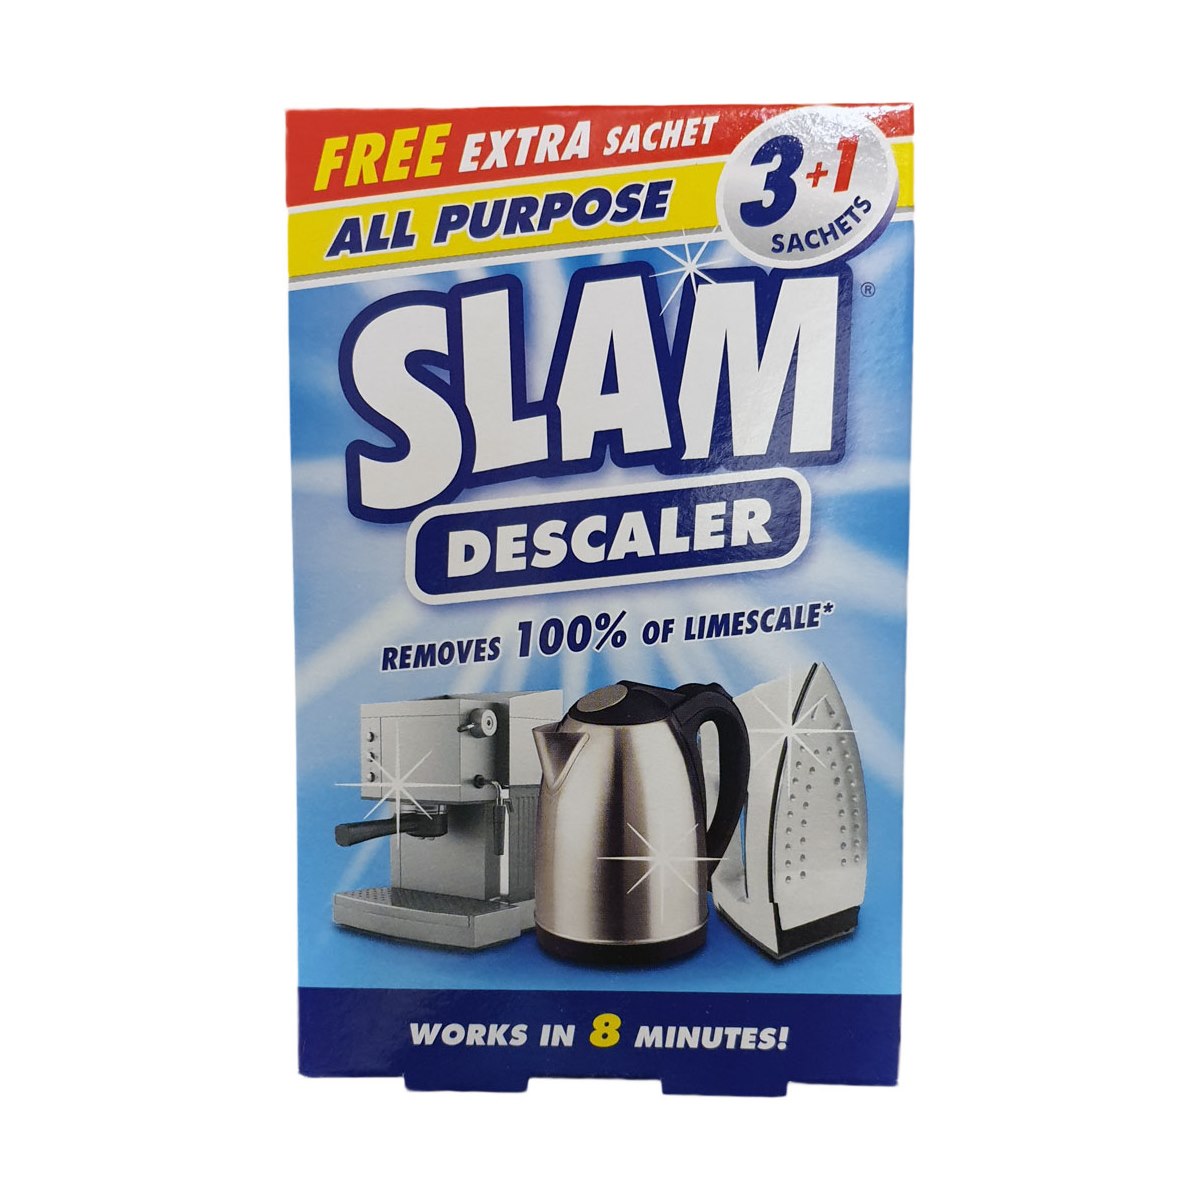 Kilrock Slam All Purpose Descaler Extra Sachet Pack 3+1